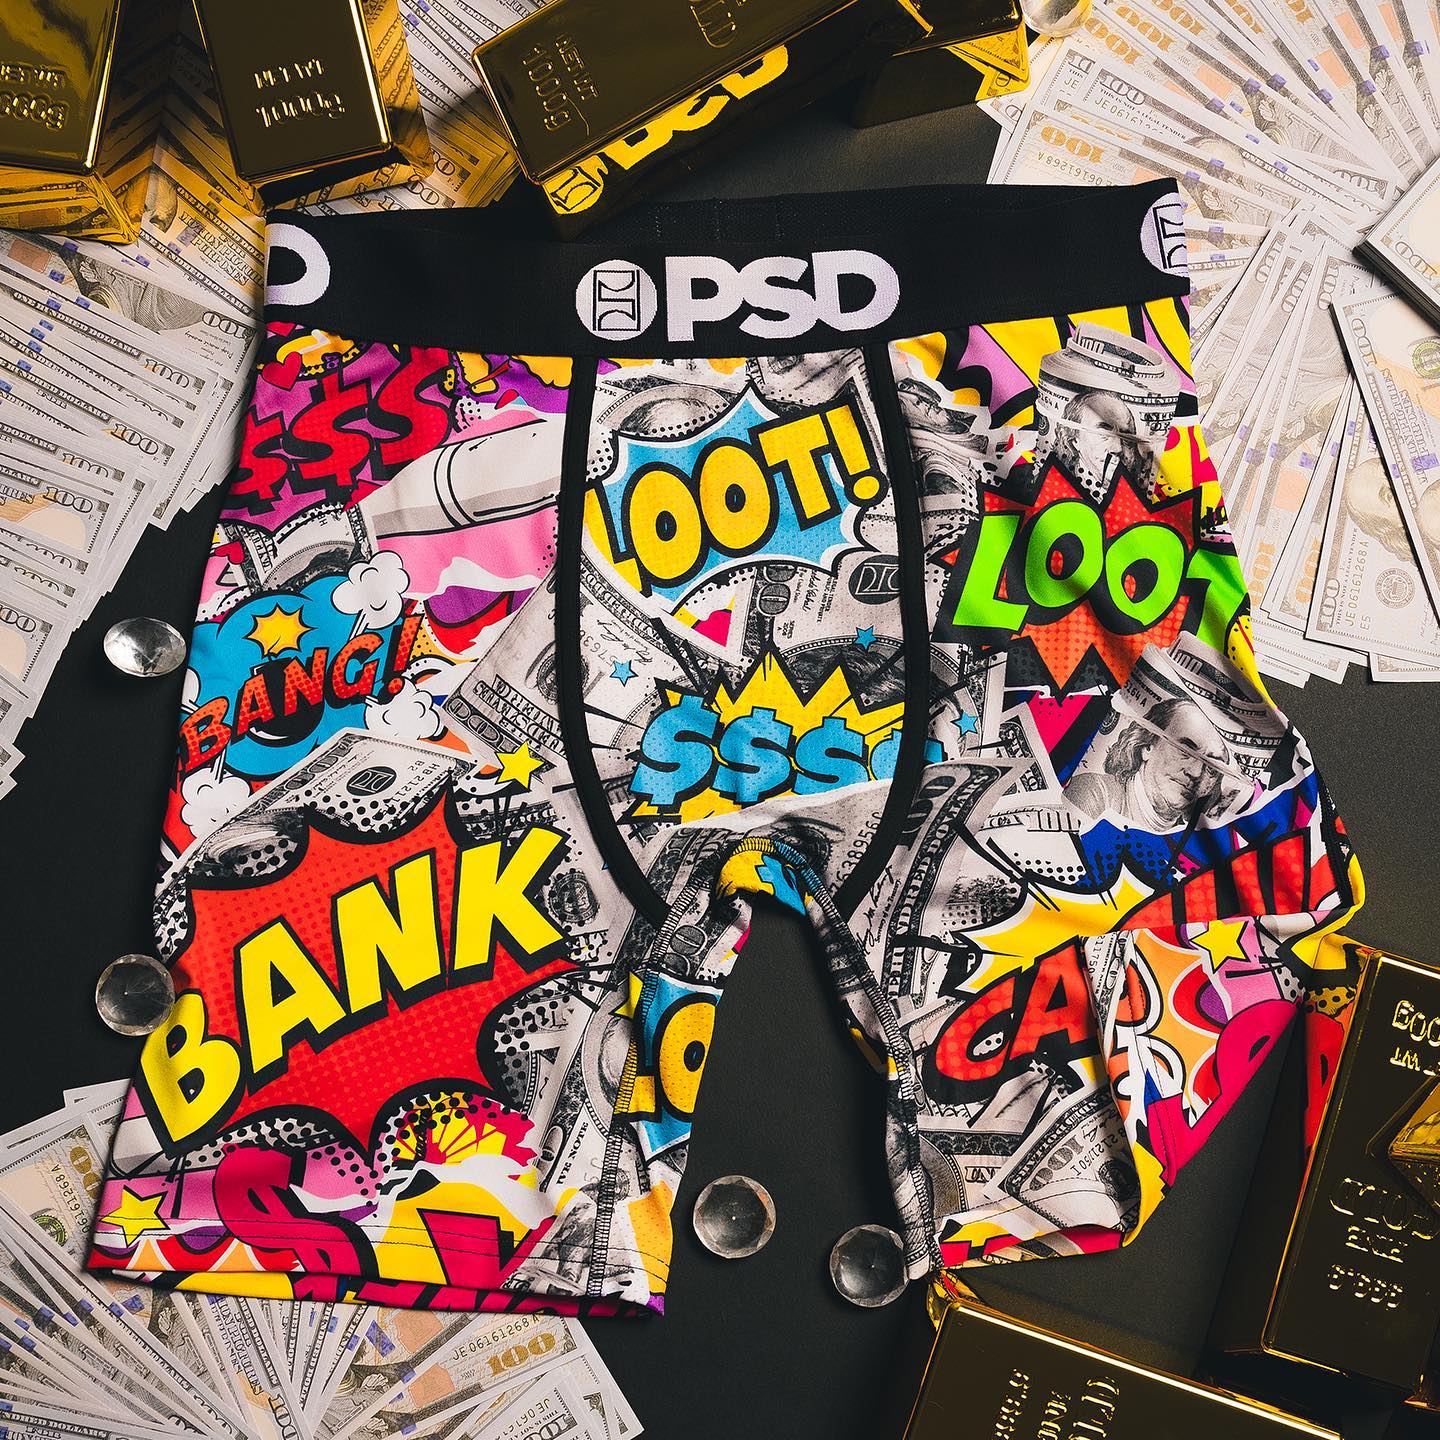 PSD Men's Hustle Multi-Color Boxer Brief underwear Clothing Apparel  Skateboar